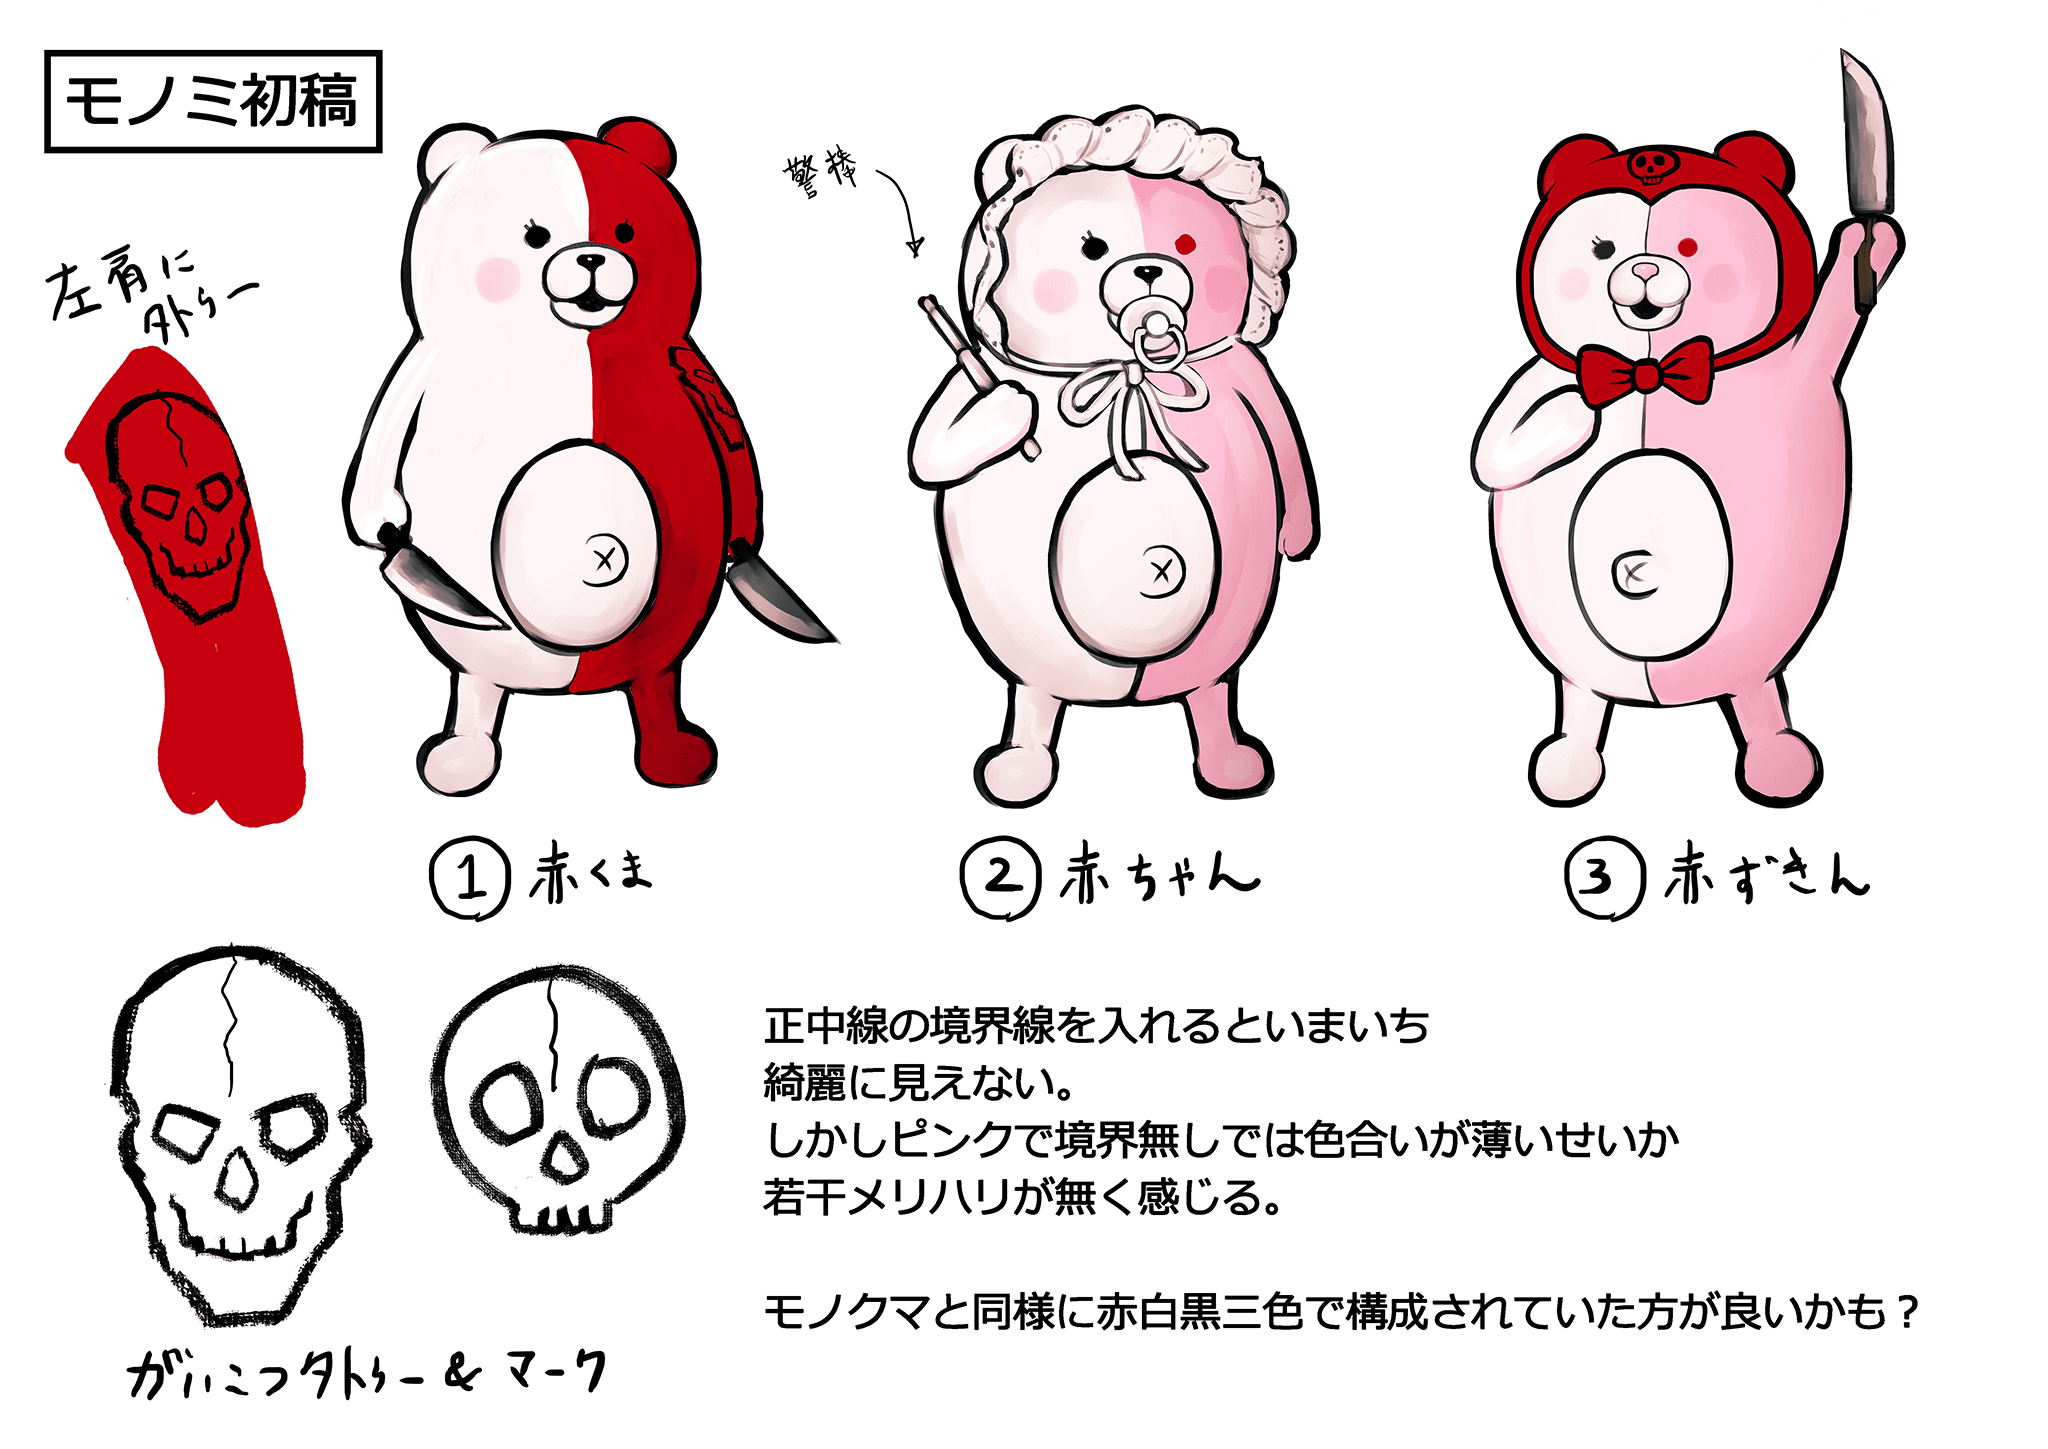 Legit* Danganronpa Authentic Anime Plush Toy Doll Stuffed Bear Monomi  #53544 | eBay